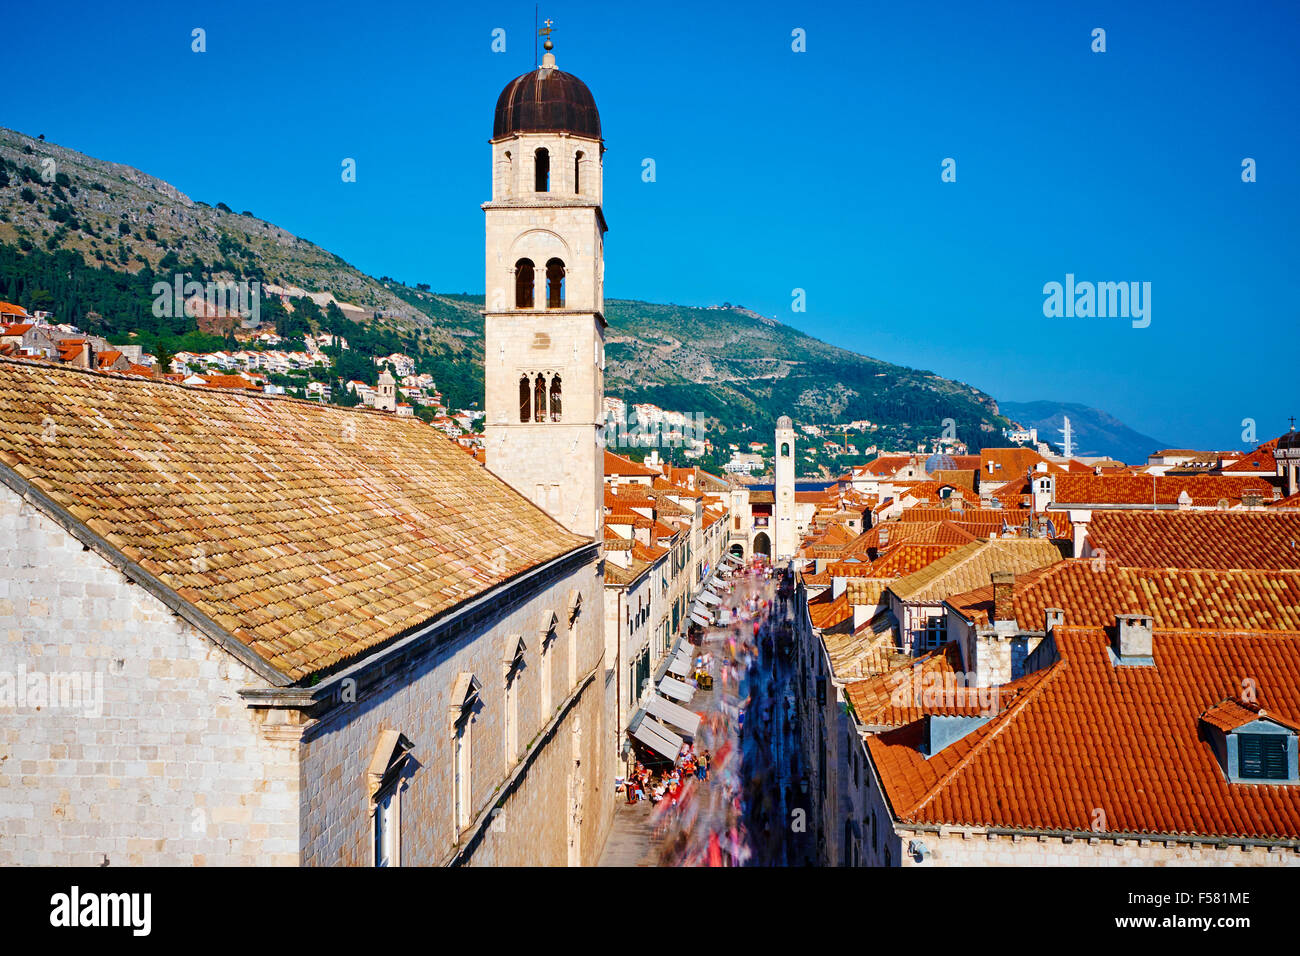 Croatia, Dalmatia, Dubrovnik, historical centre, Unesco World Heritage site, old town, main street Placa Stradum Stock Photo